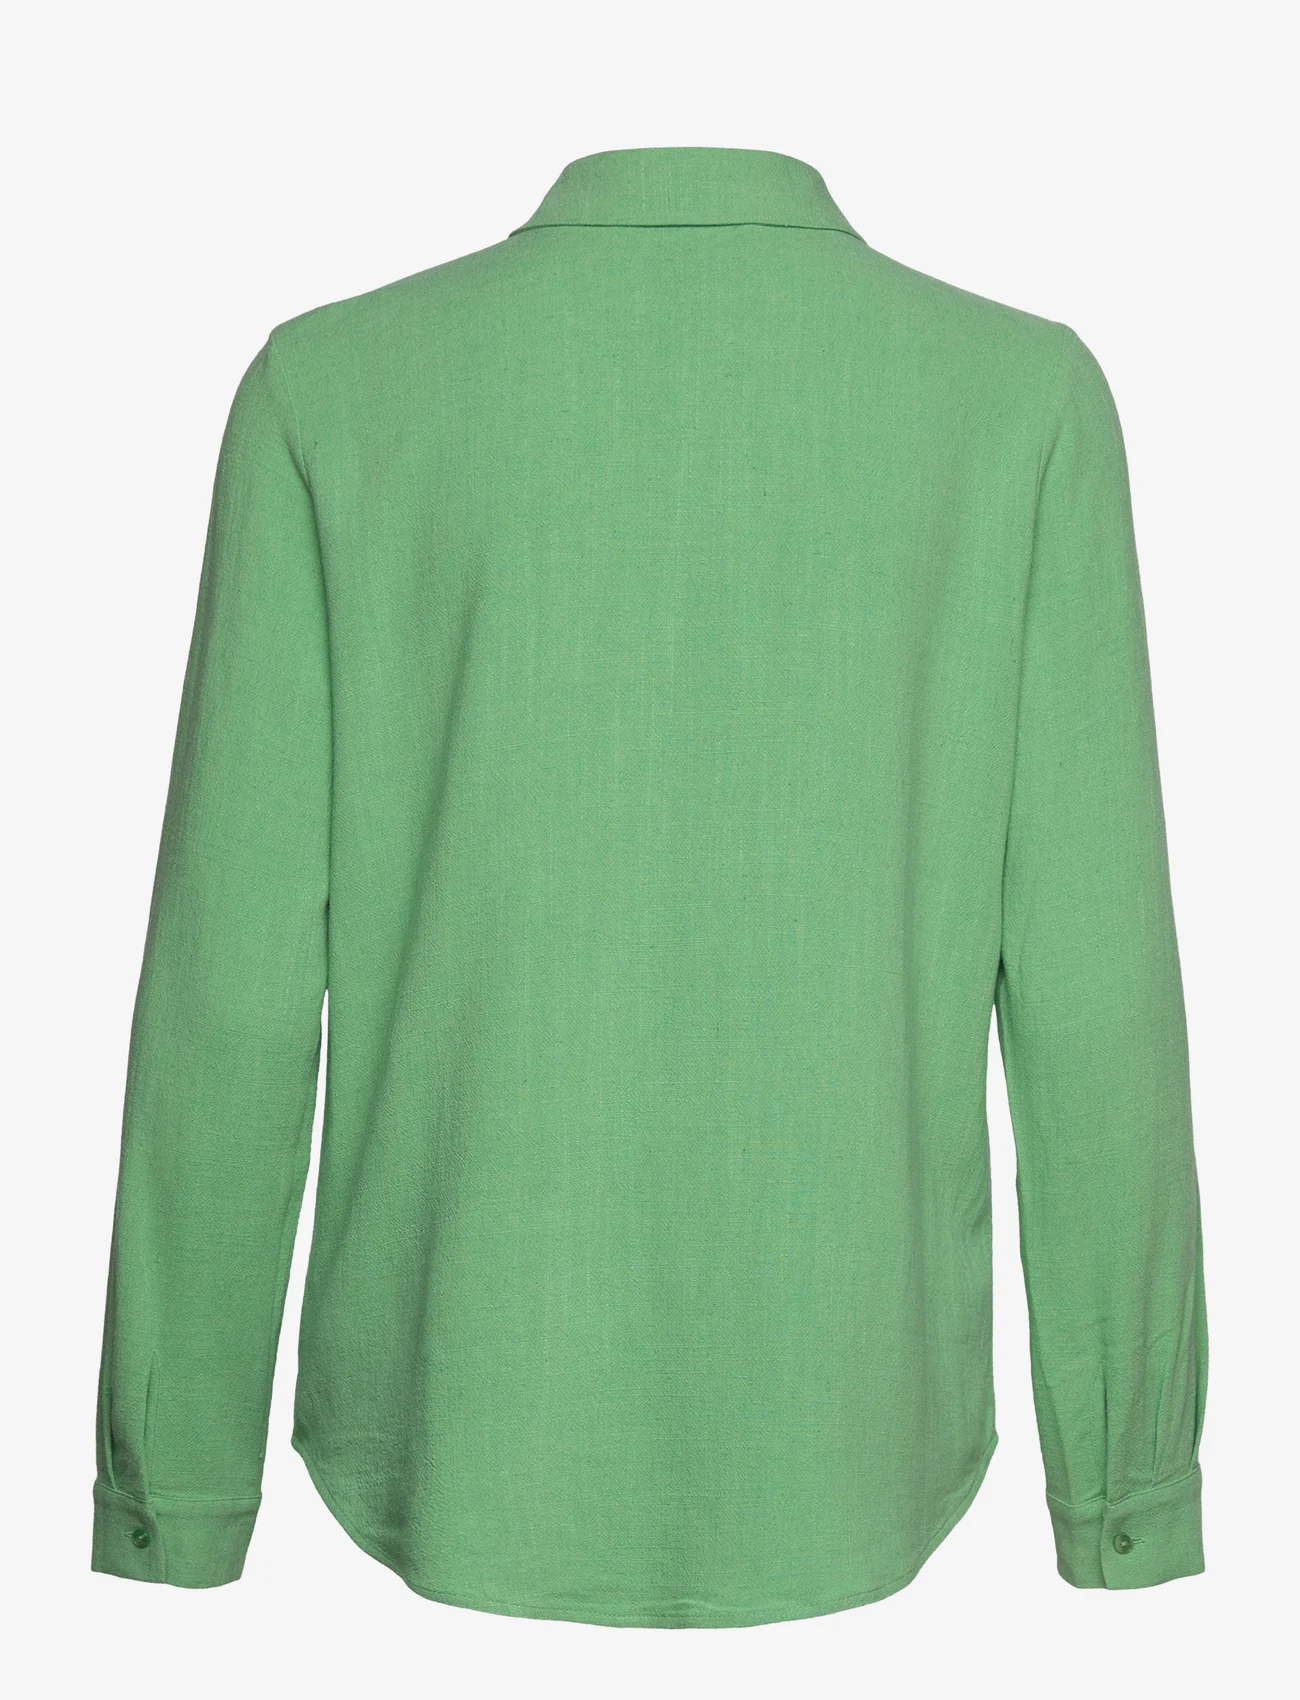 Selected Femme - SLFVIVA LS SHIRT NOOS - koszule z długimi rękawami - absinthe green - 1